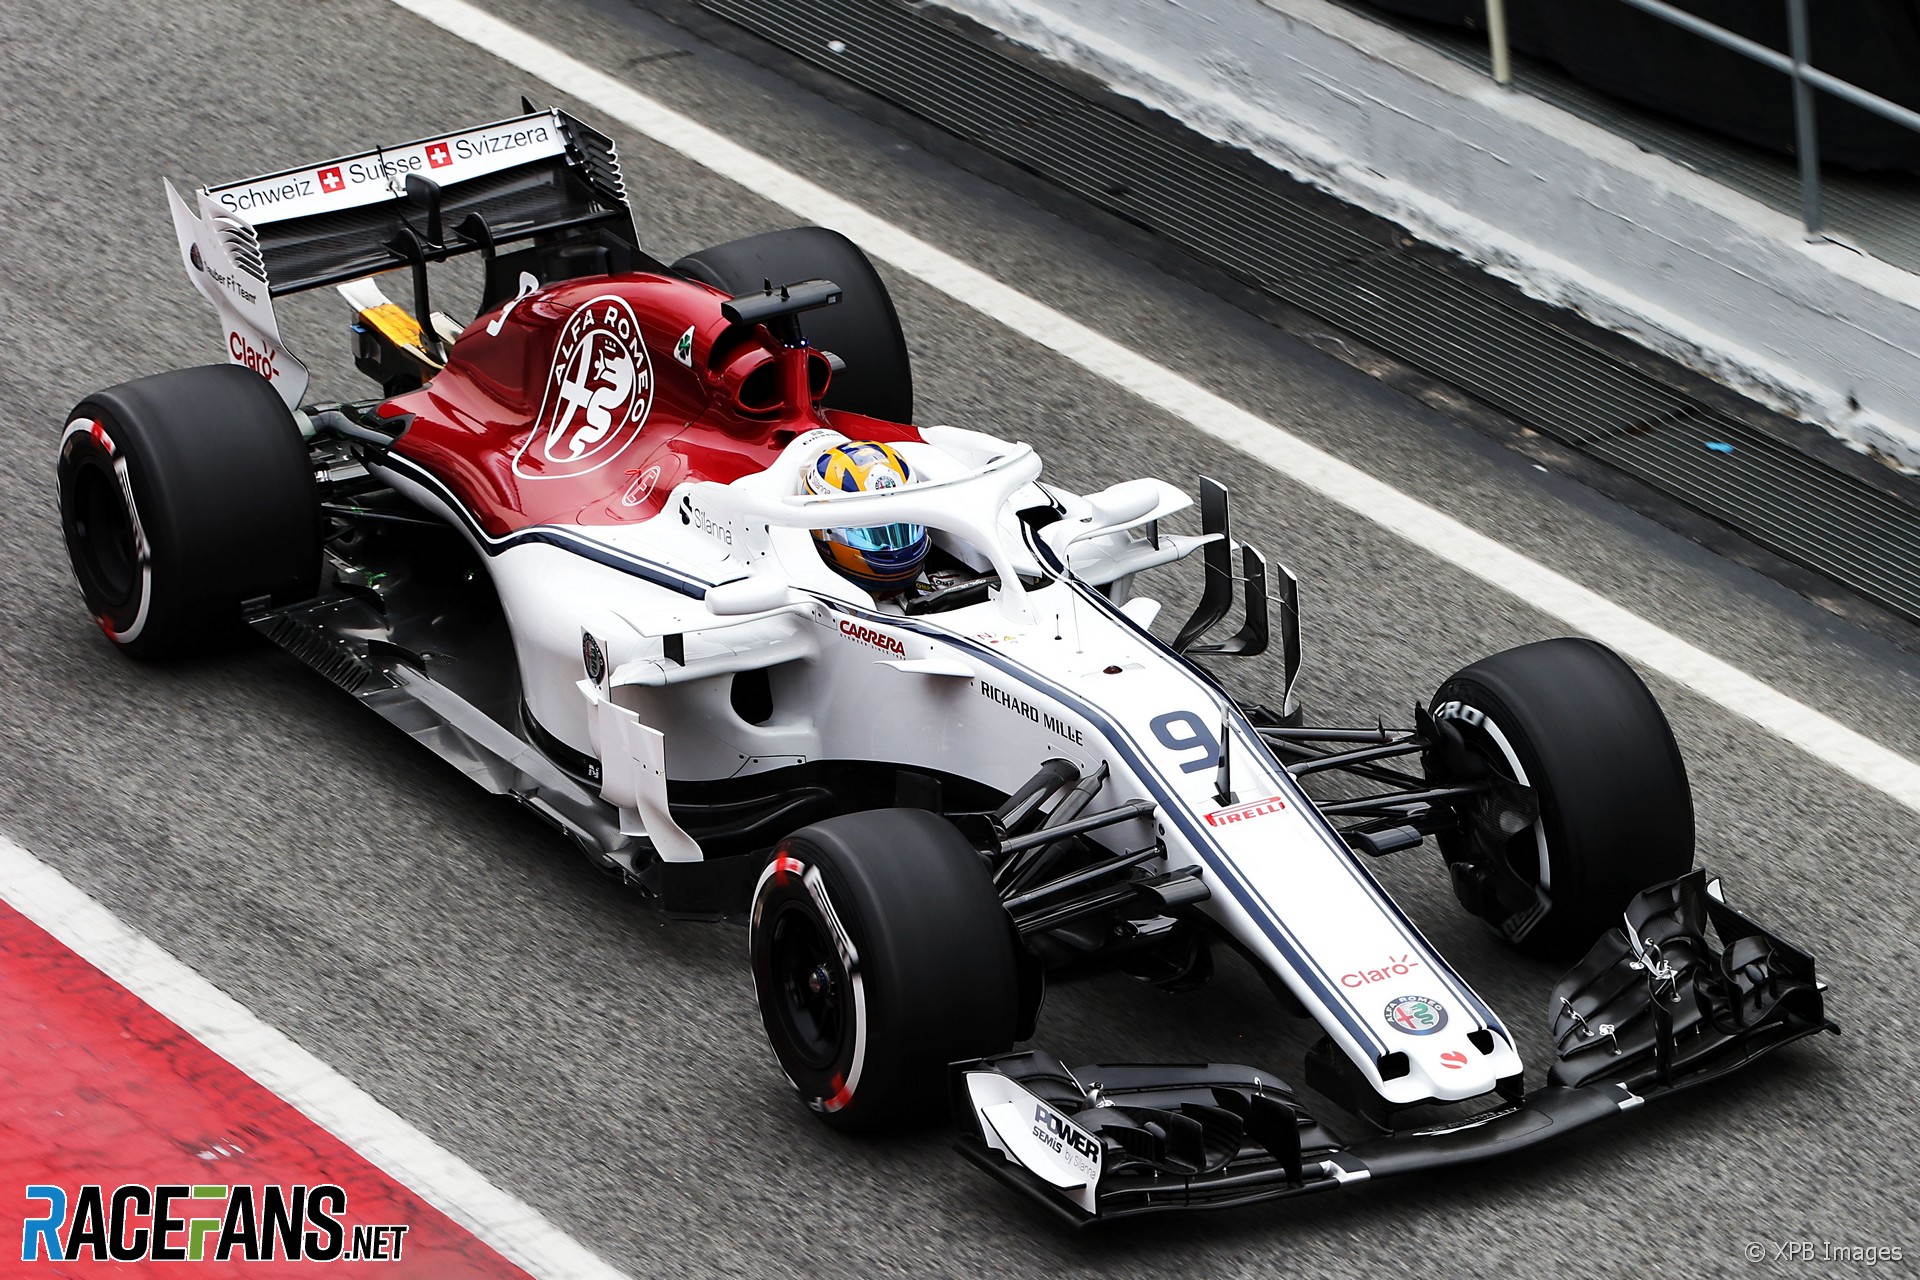 Marcus Ericsson, Sauber, Circuit de Catalunya, 2018